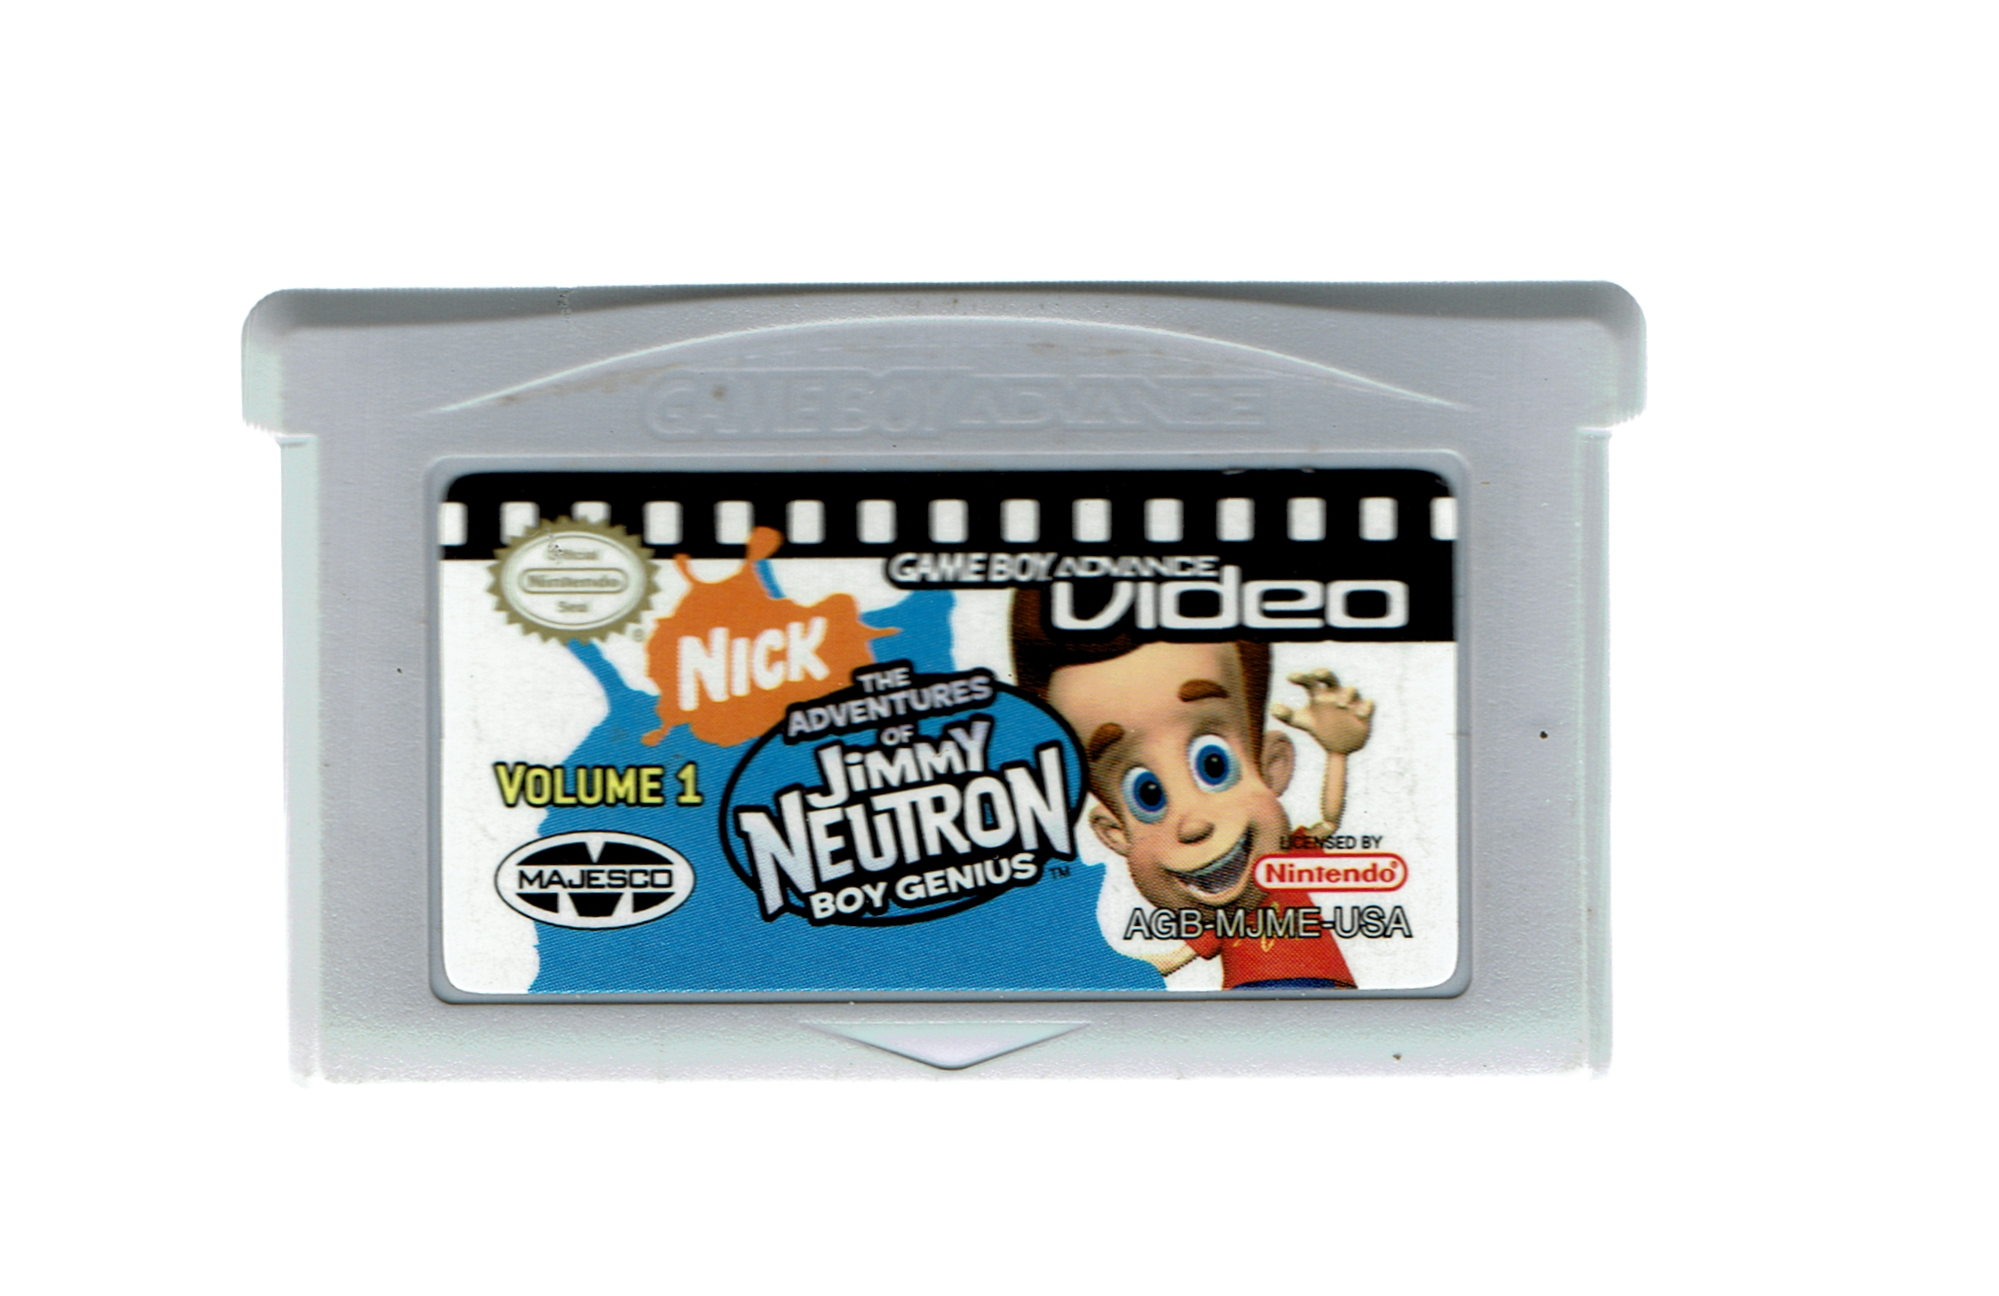 The Adventures of Jimmy Neutron Boy Genius Video Vol 1